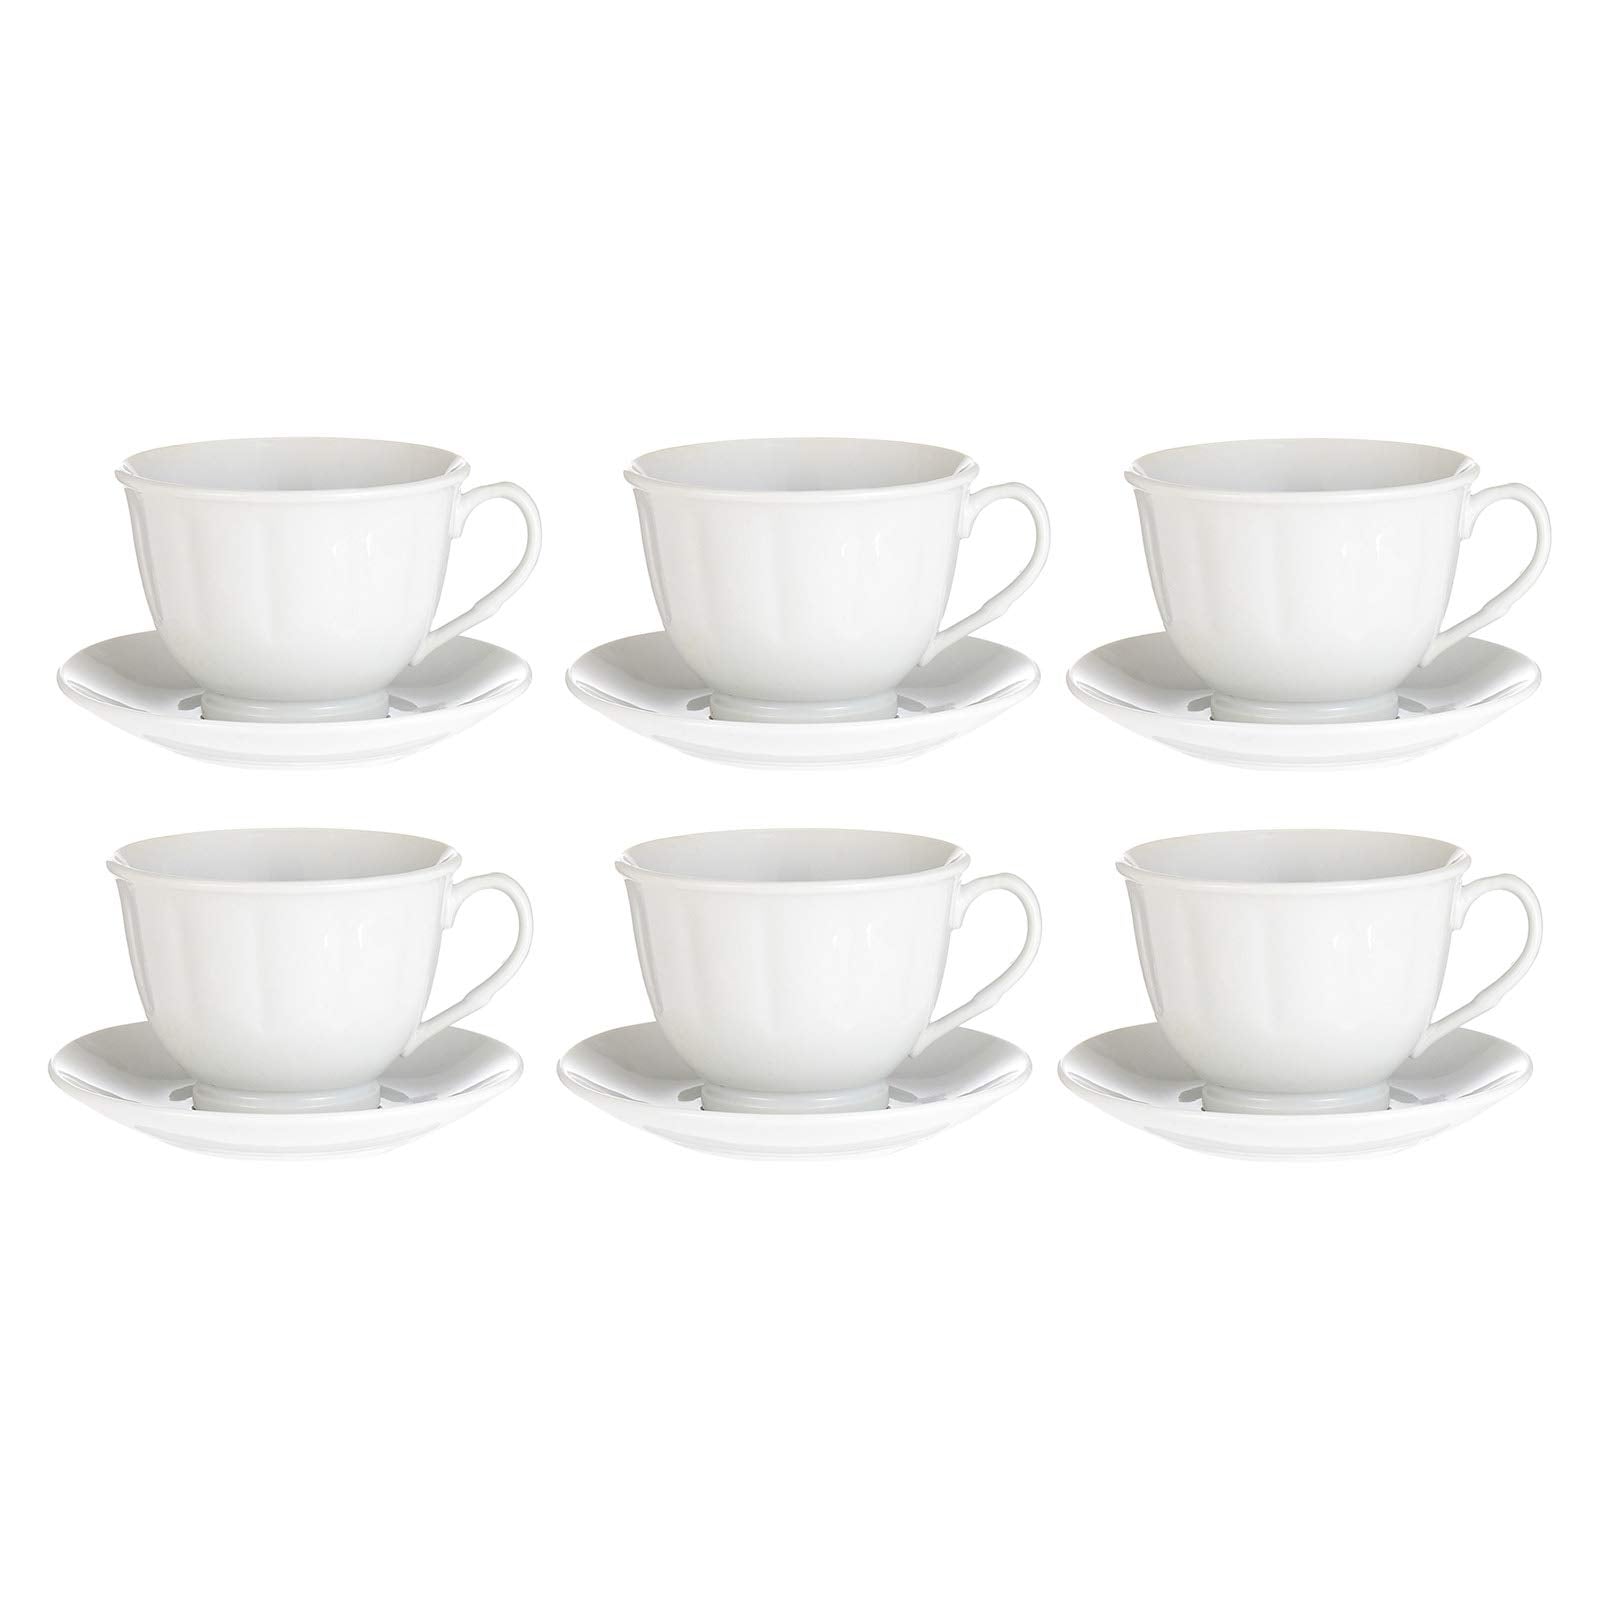 Harmony Cup and Saucer Set, 180 ml - 12 Pieces, White هارموني طقم فناجين وصحون، 180 مل - 12 قطعة، ابيض